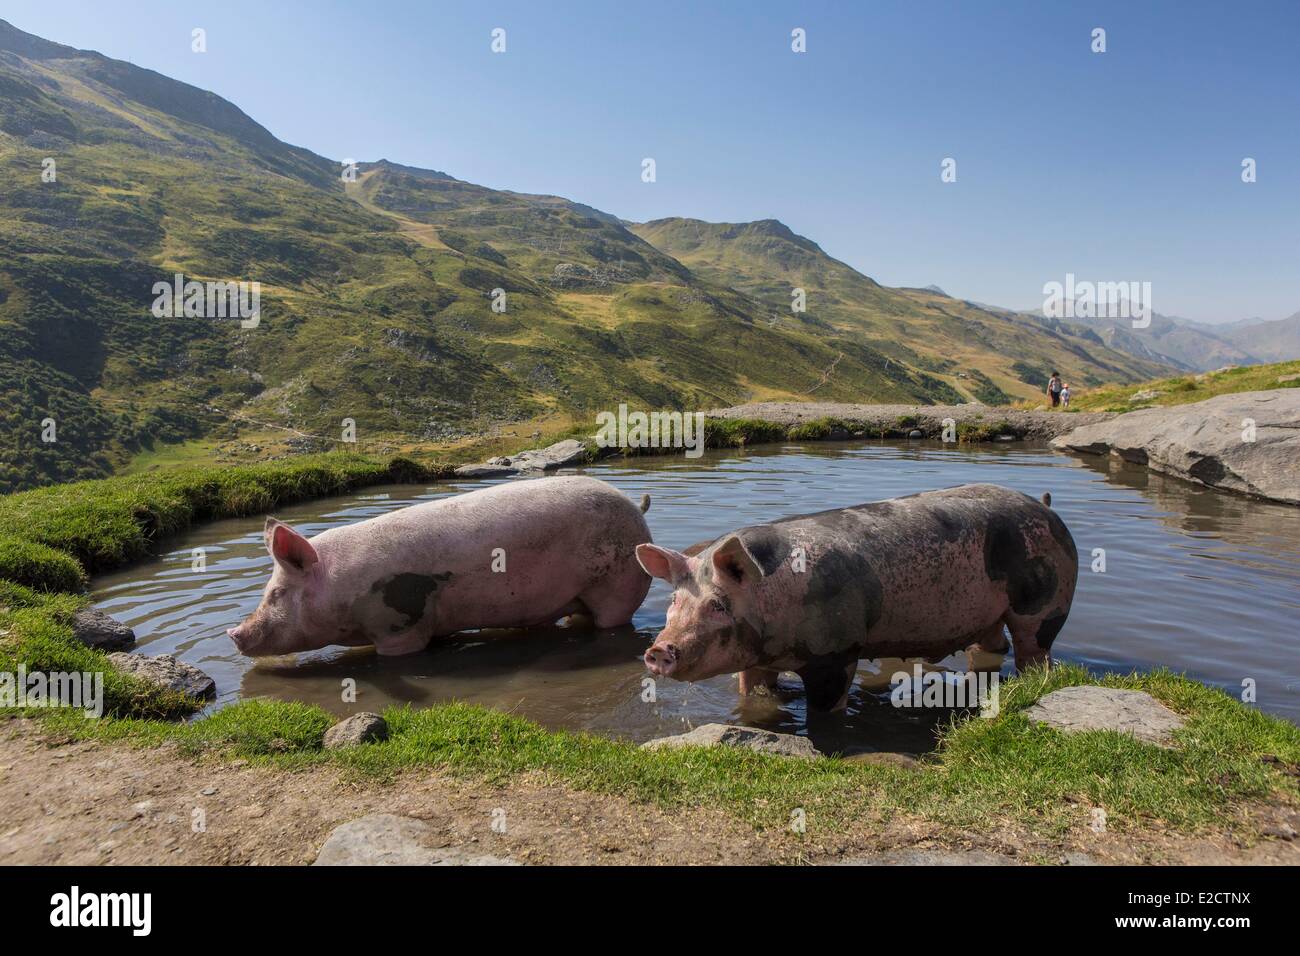 France Savoie Les Menuires the farm La Chasse pigs in their puddle Bellevilles valley massif of La Vanoise Stock Photo